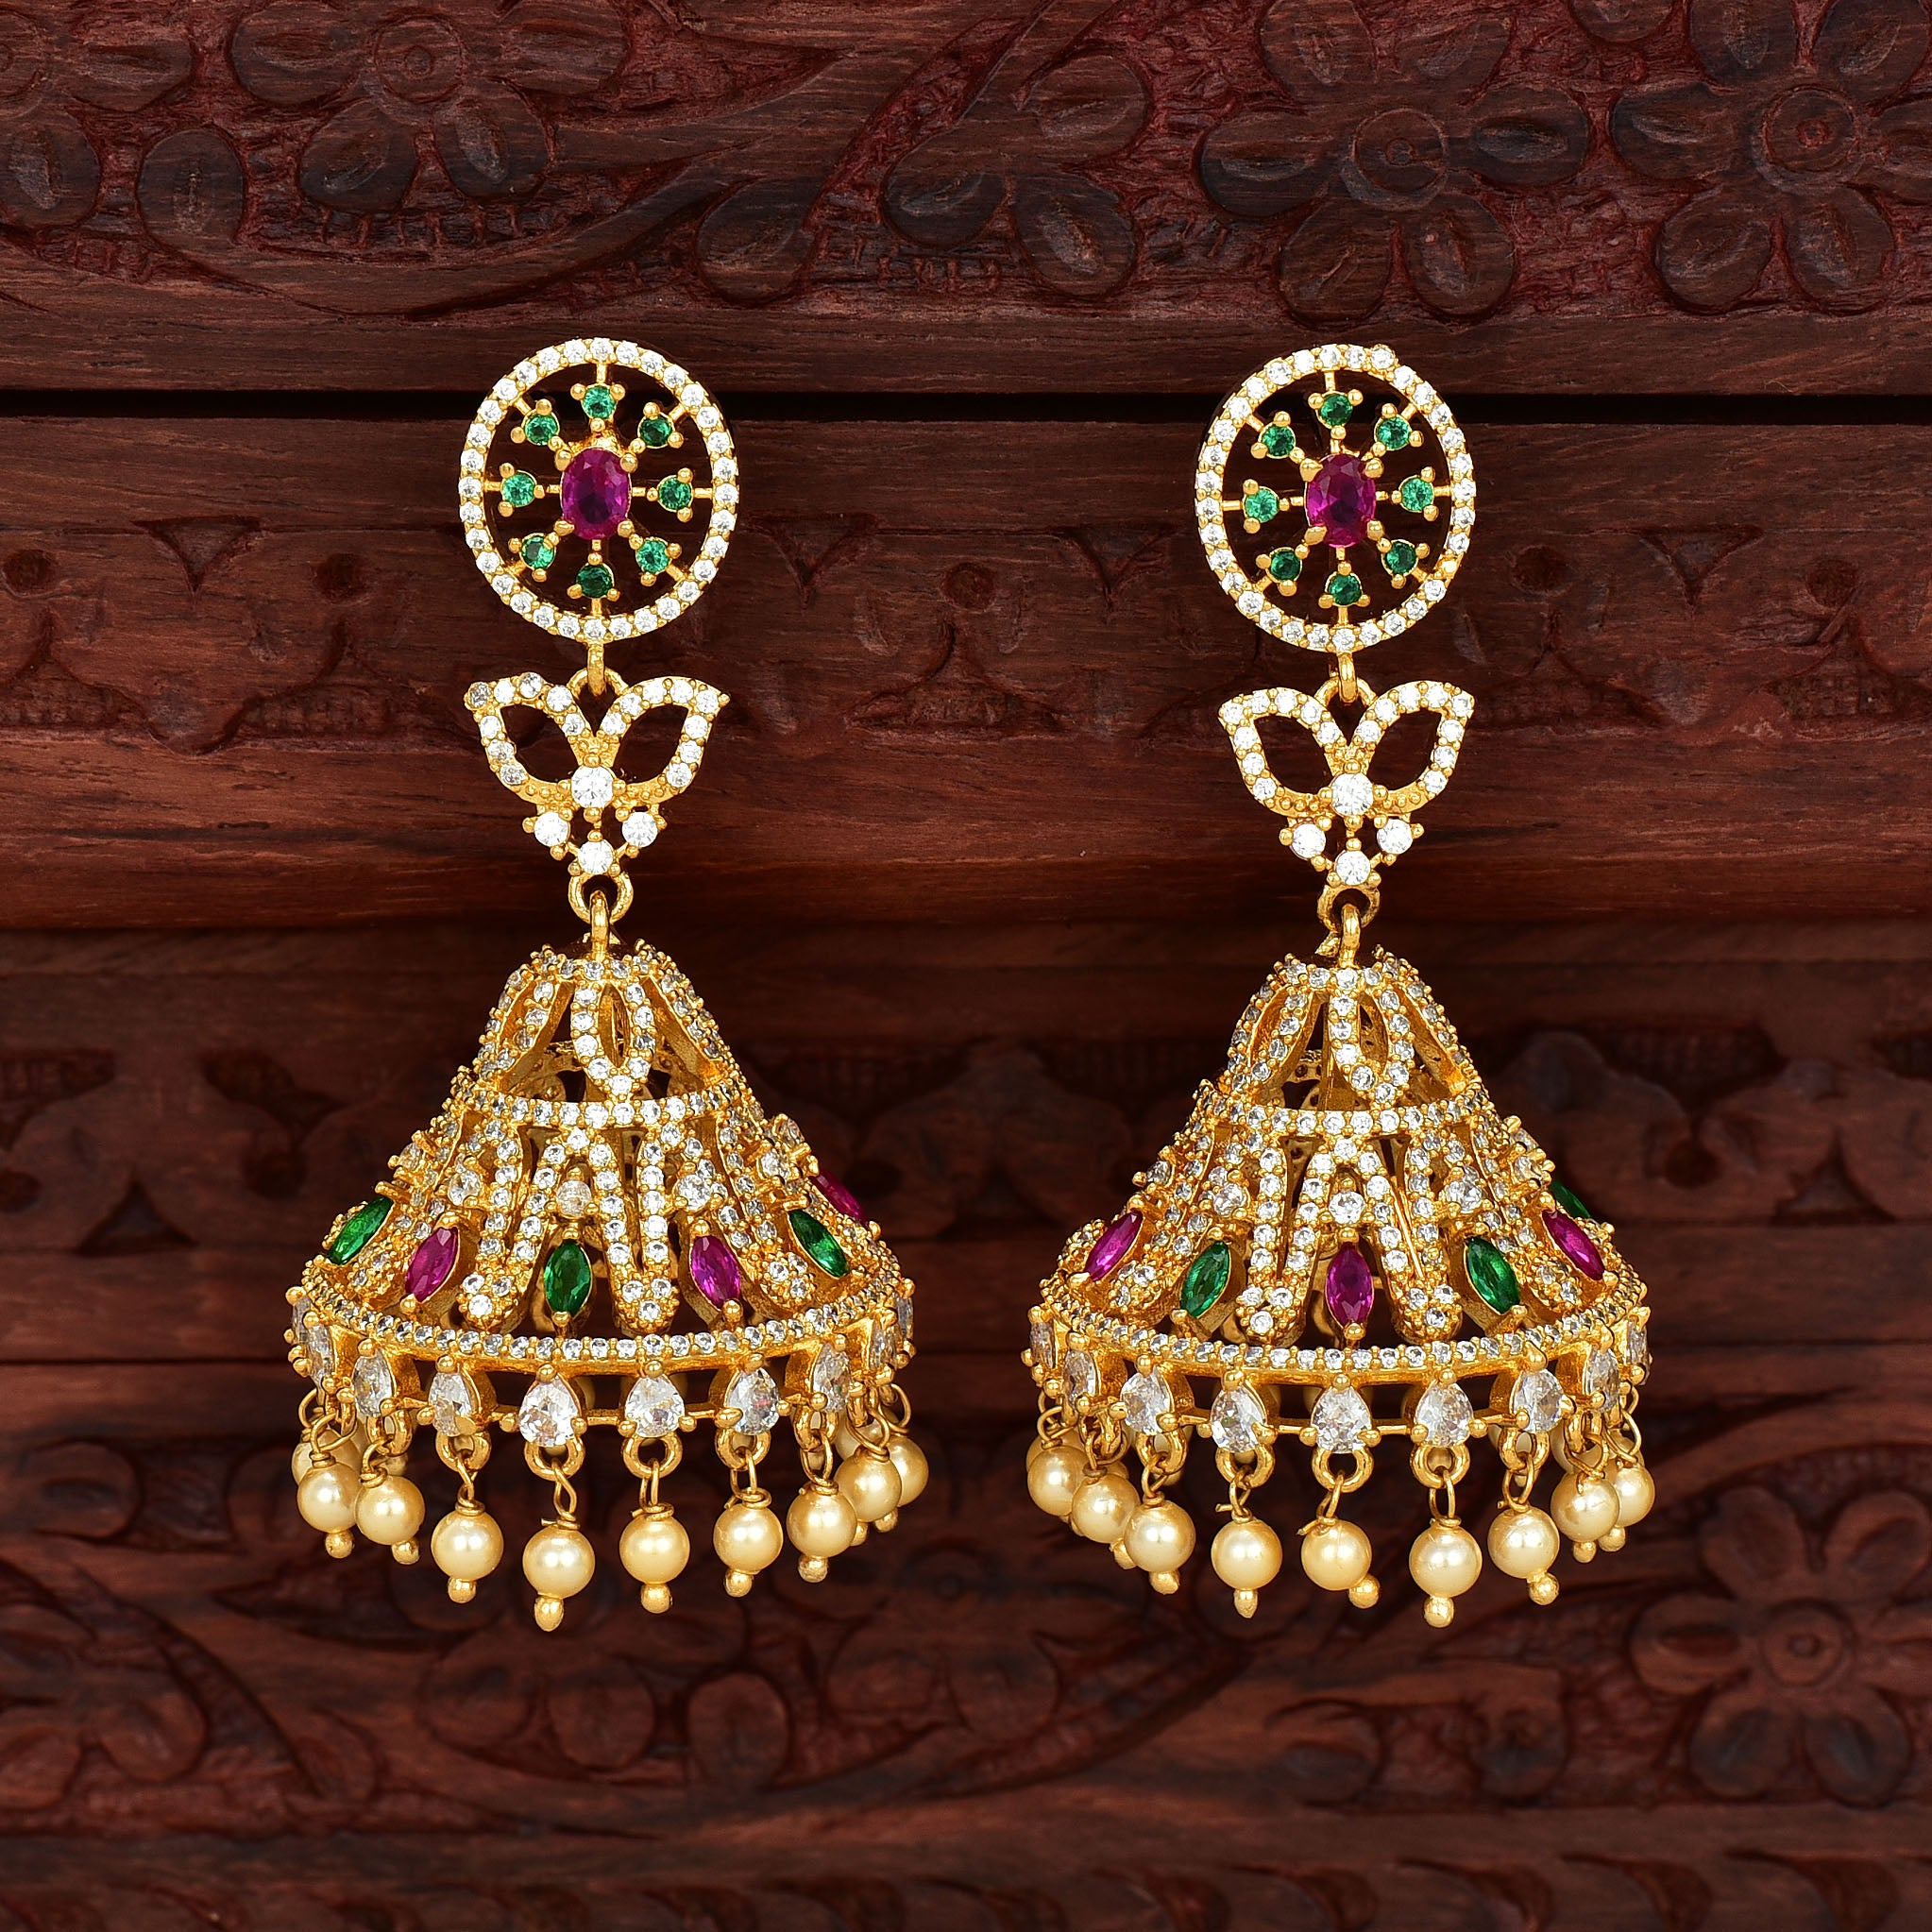 22K Gold Jhumkas (Buttalu) - Gold Dangle Earrings with Beads (Temple  Jewellery) - 235-GJH2274 in 43.450 Grams